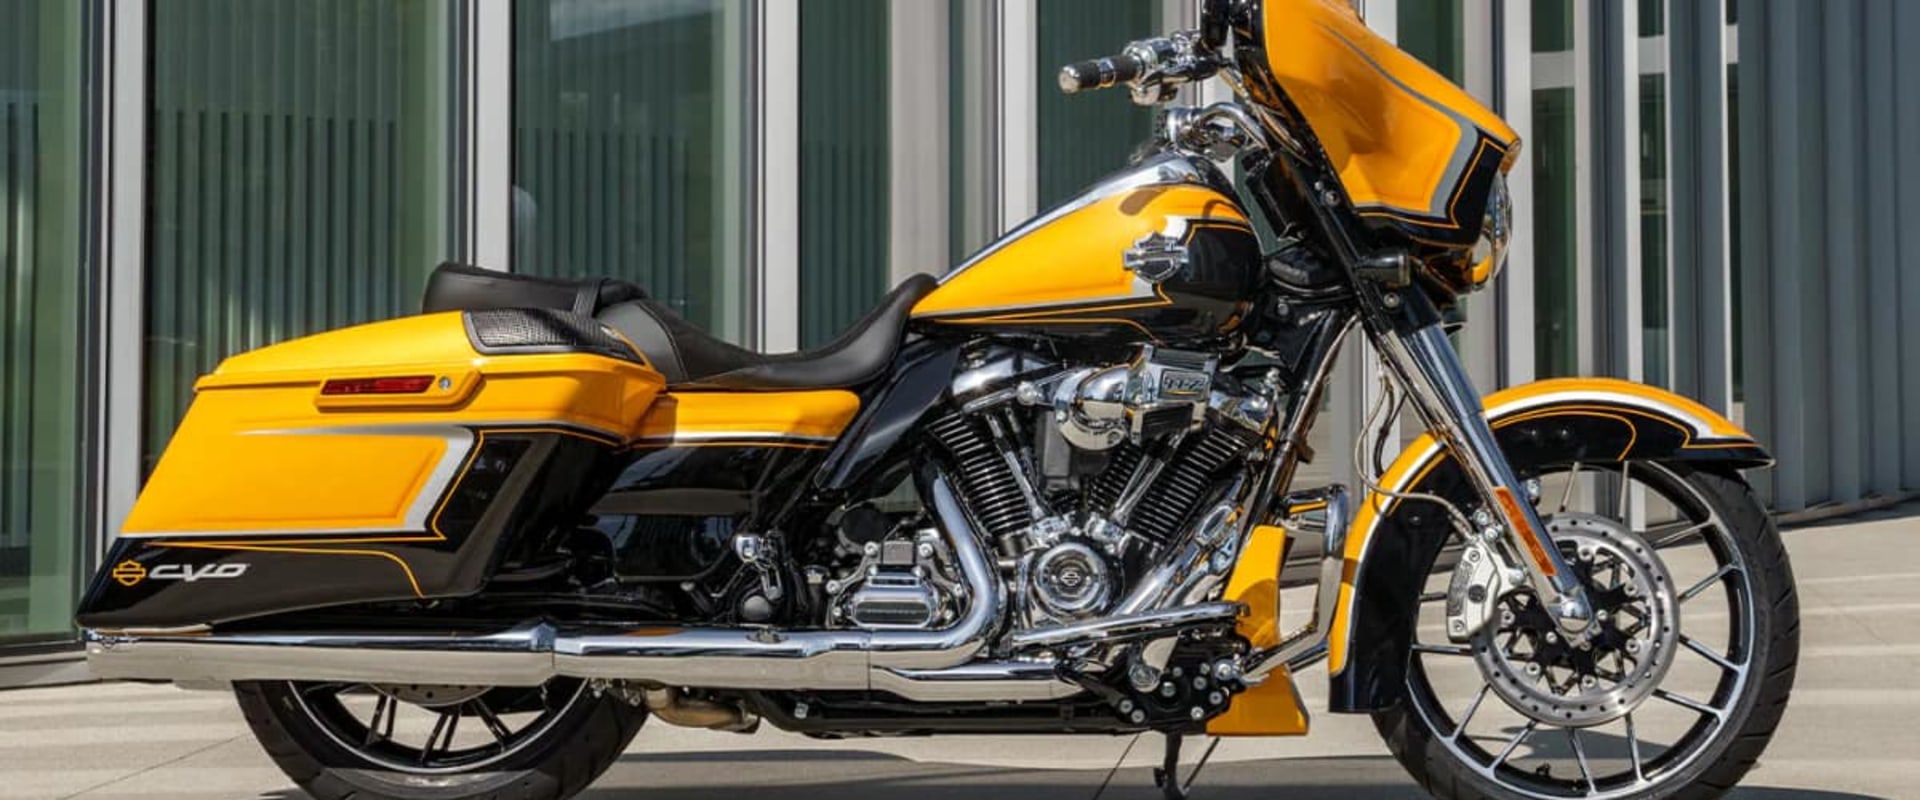 Harley Davidson Dealers in Maryland - A Comprehensive Overview